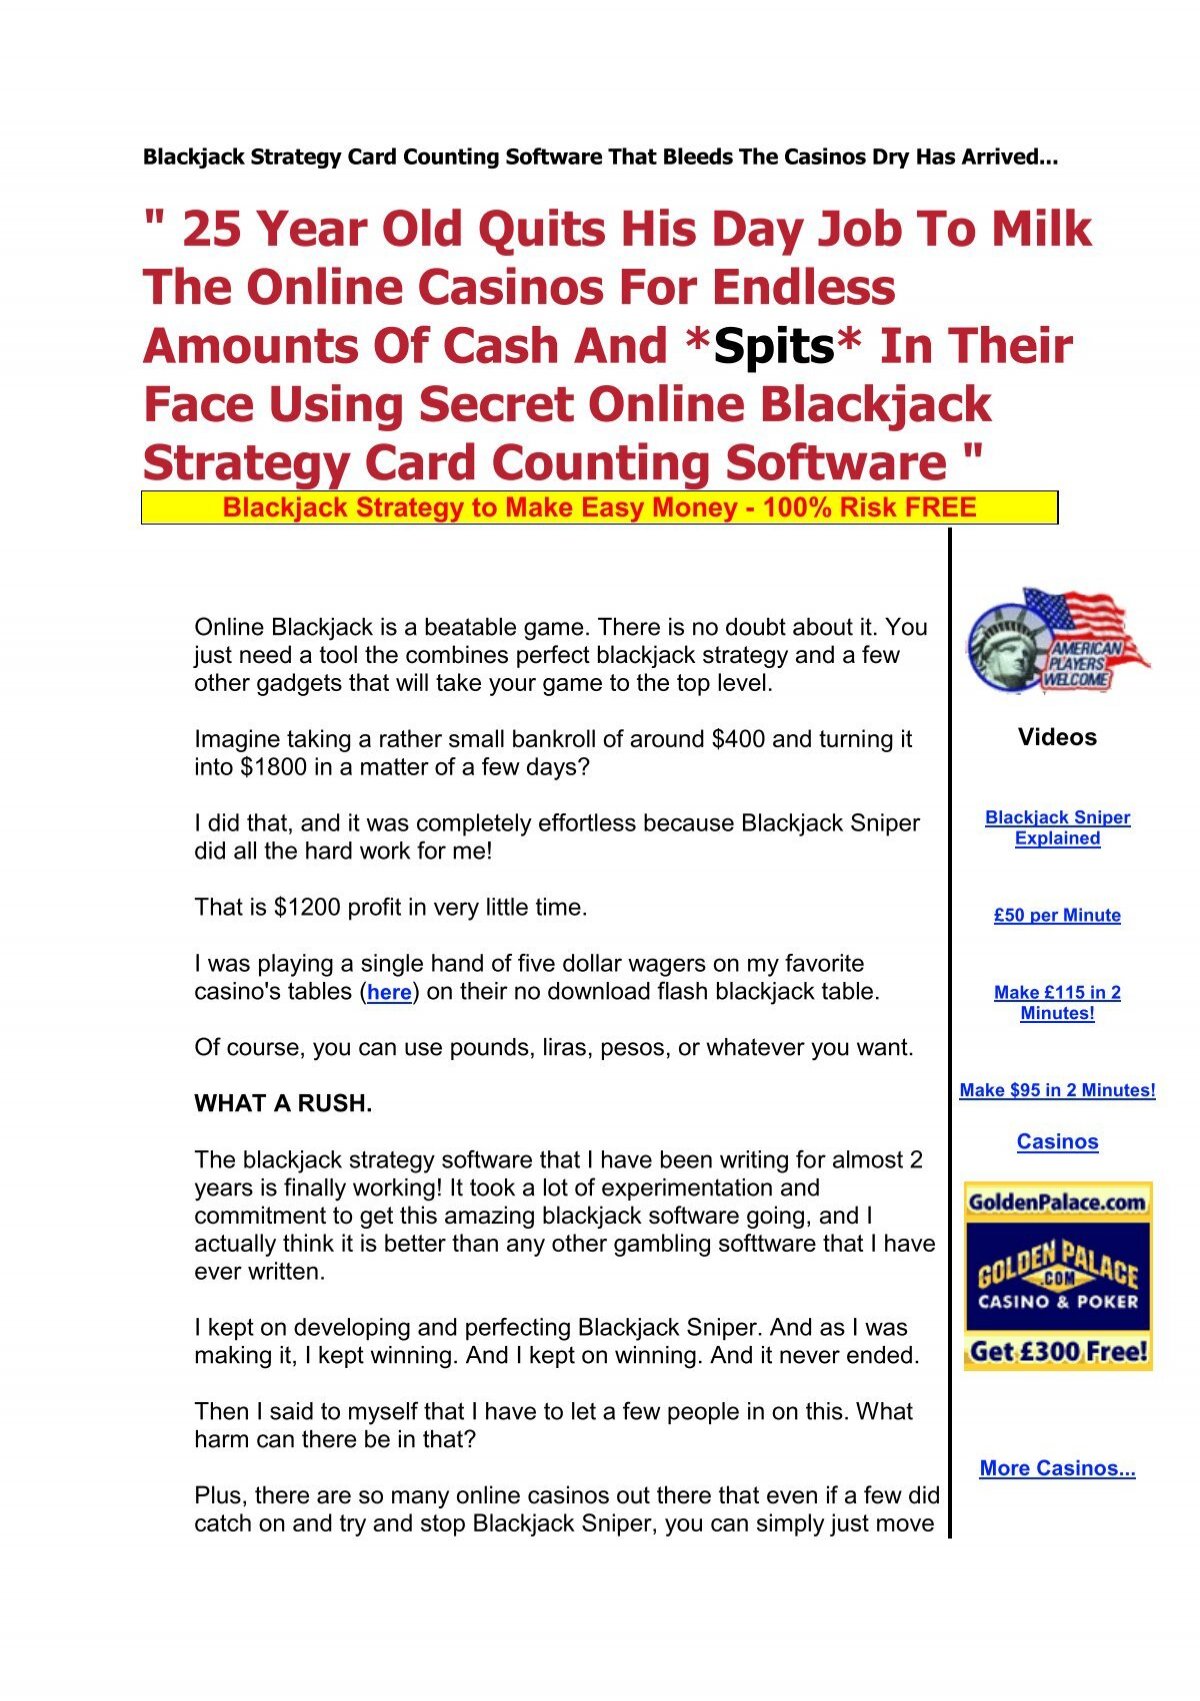 Blackjack software card counting software